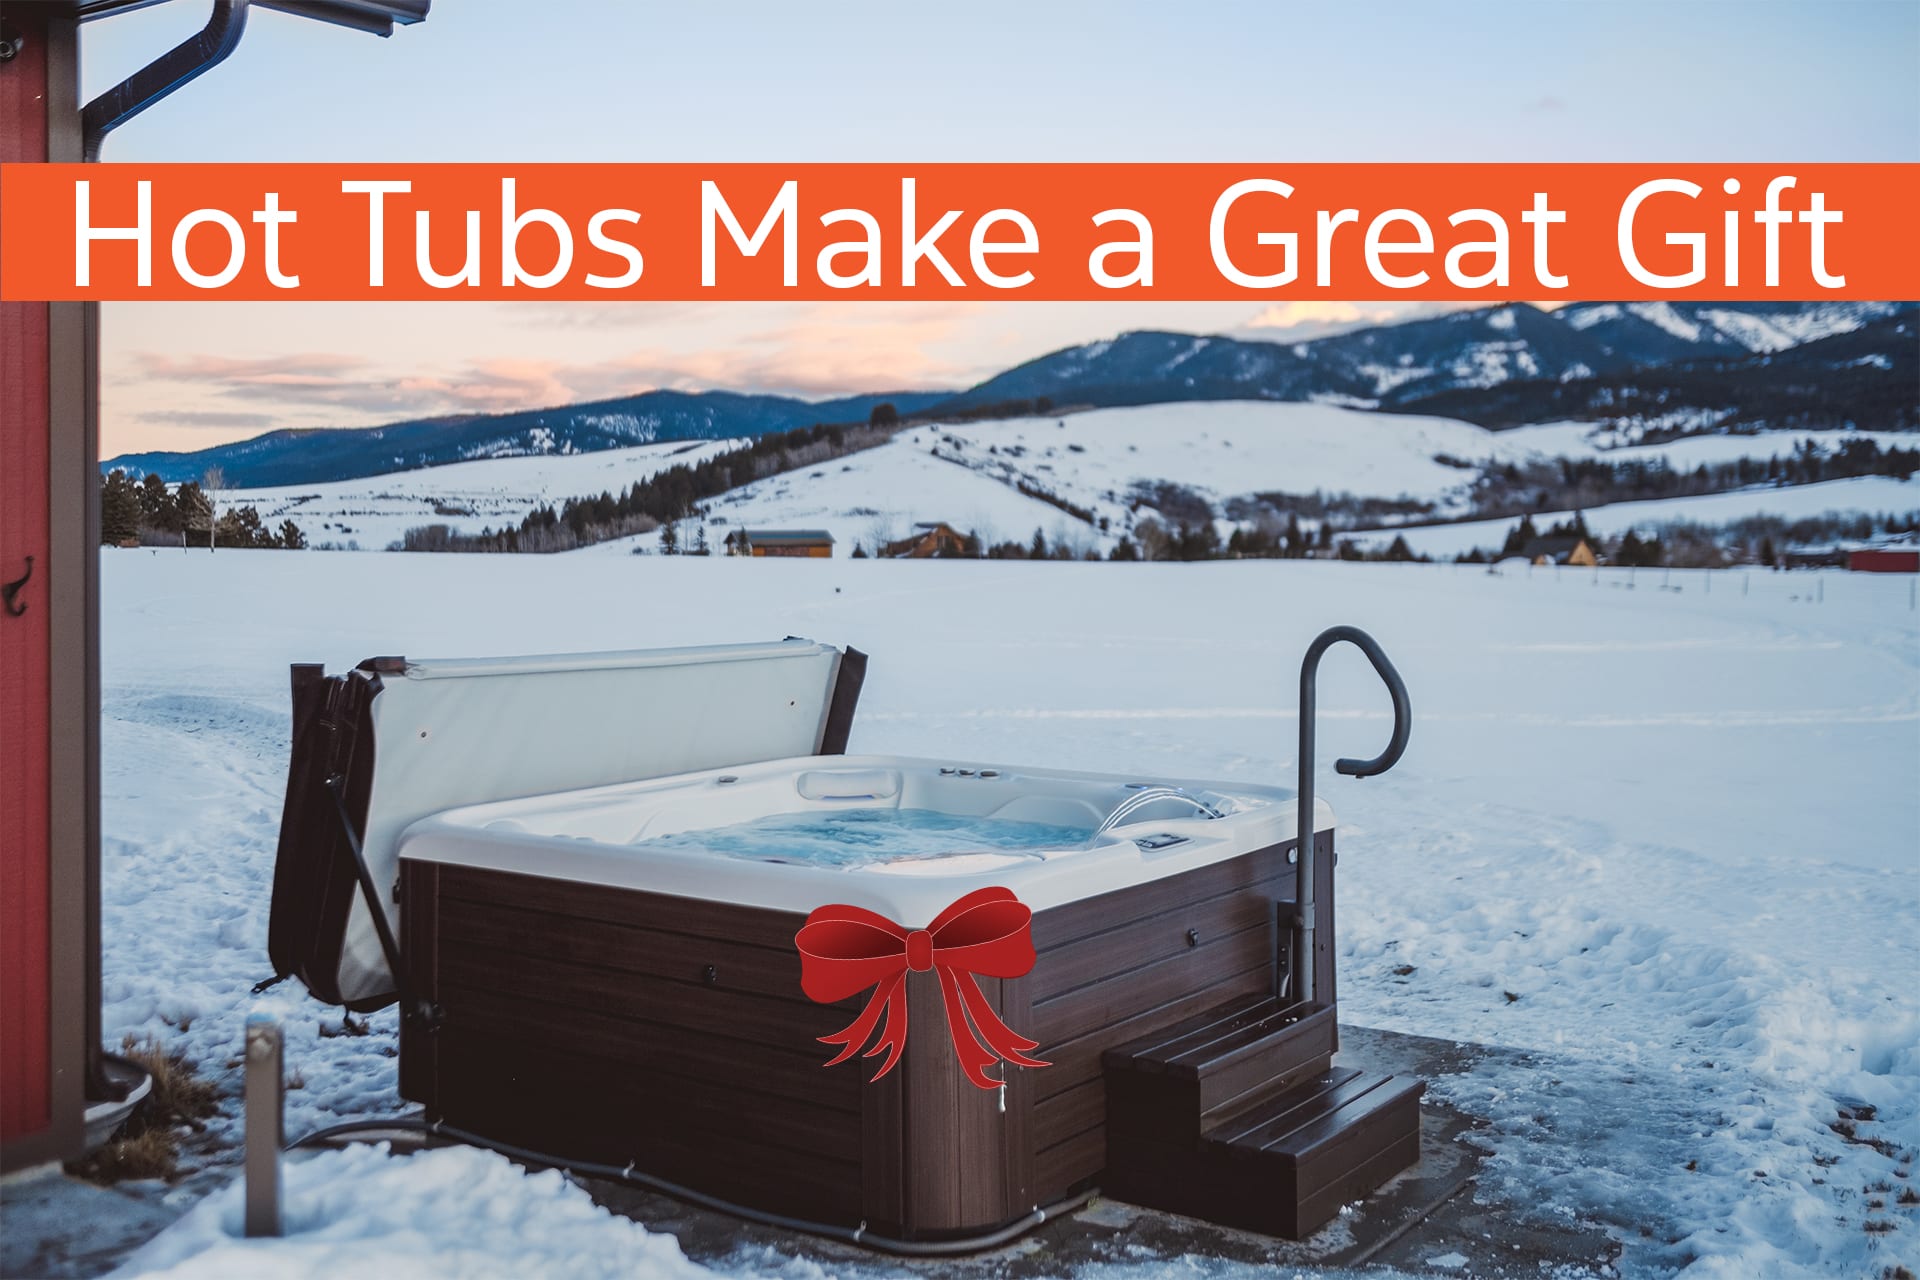 Hot Tubs Make a Great Gift